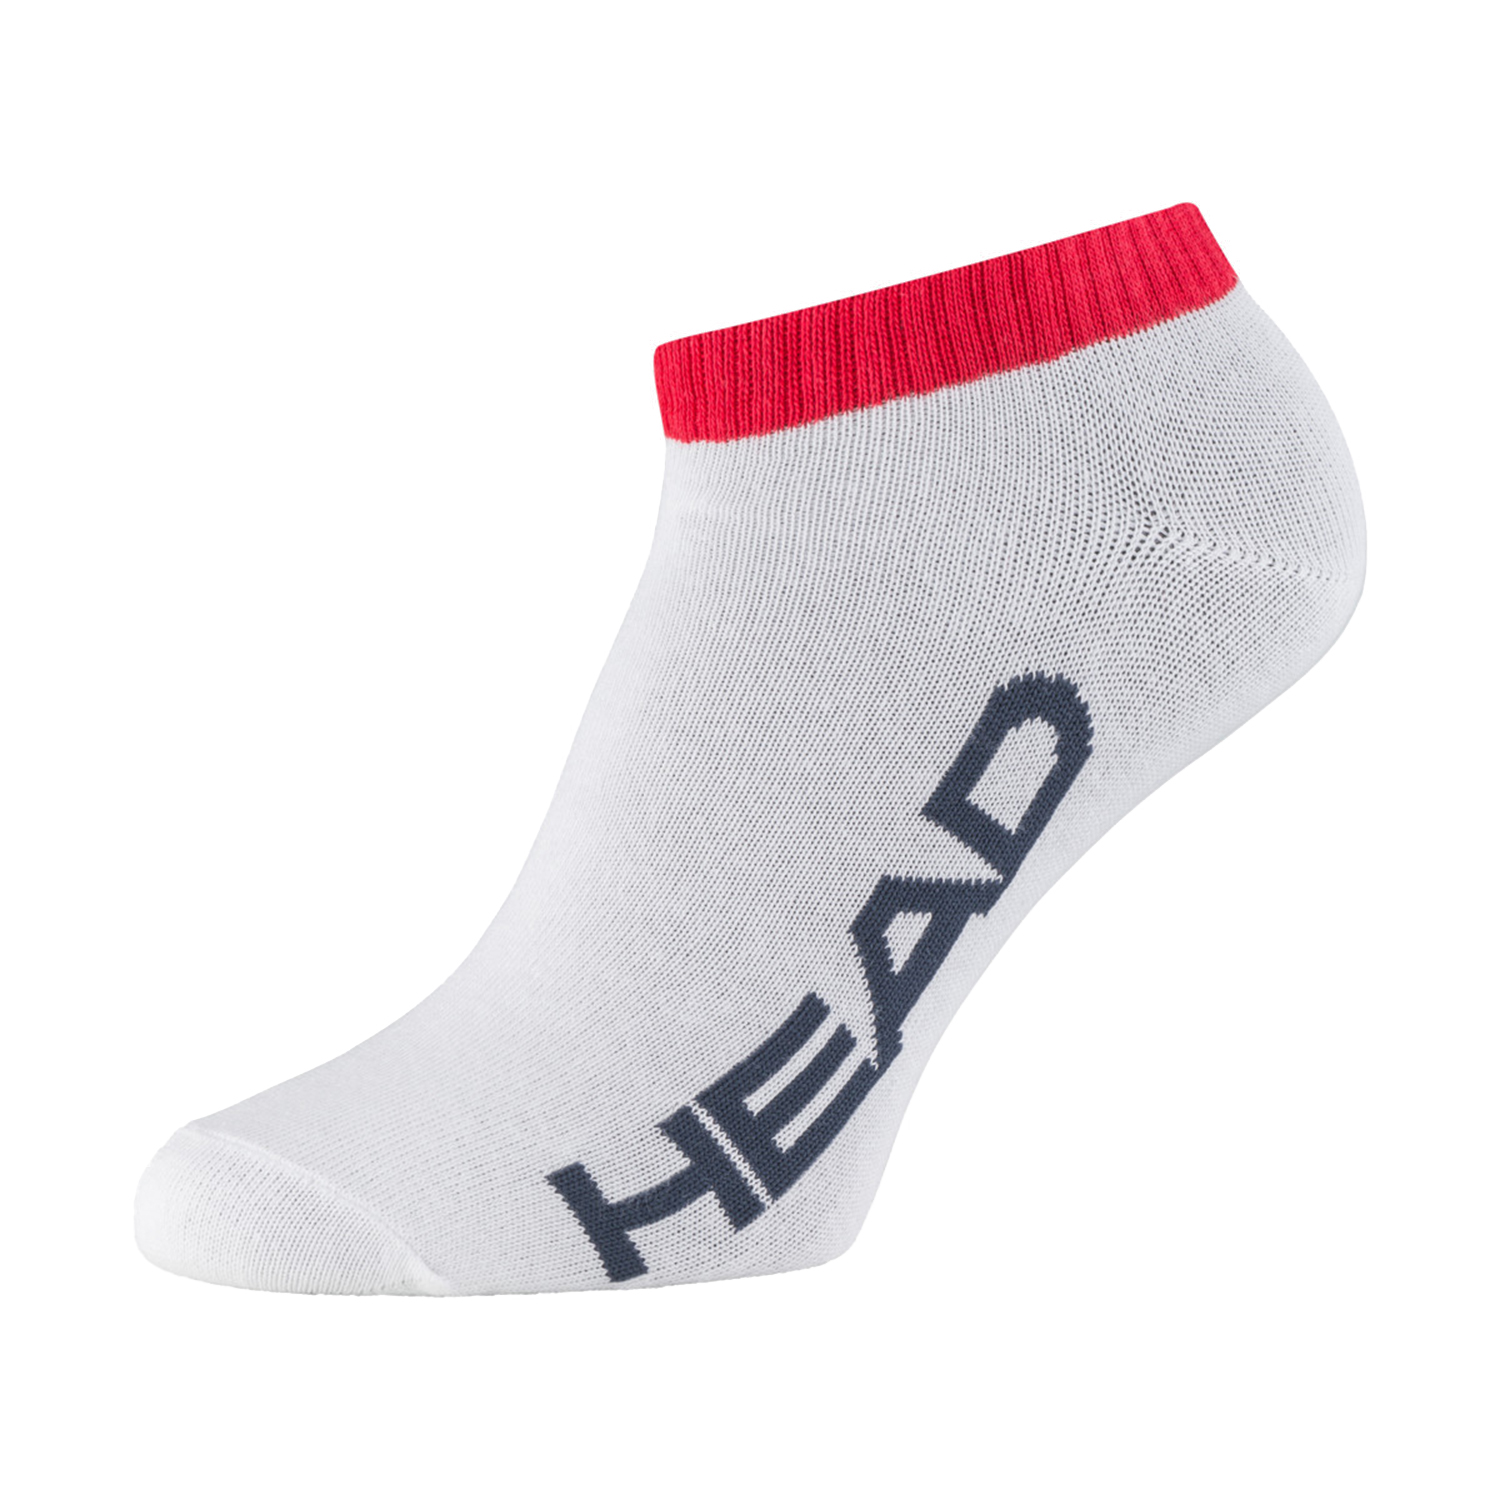 Head Pro Socks - Navy